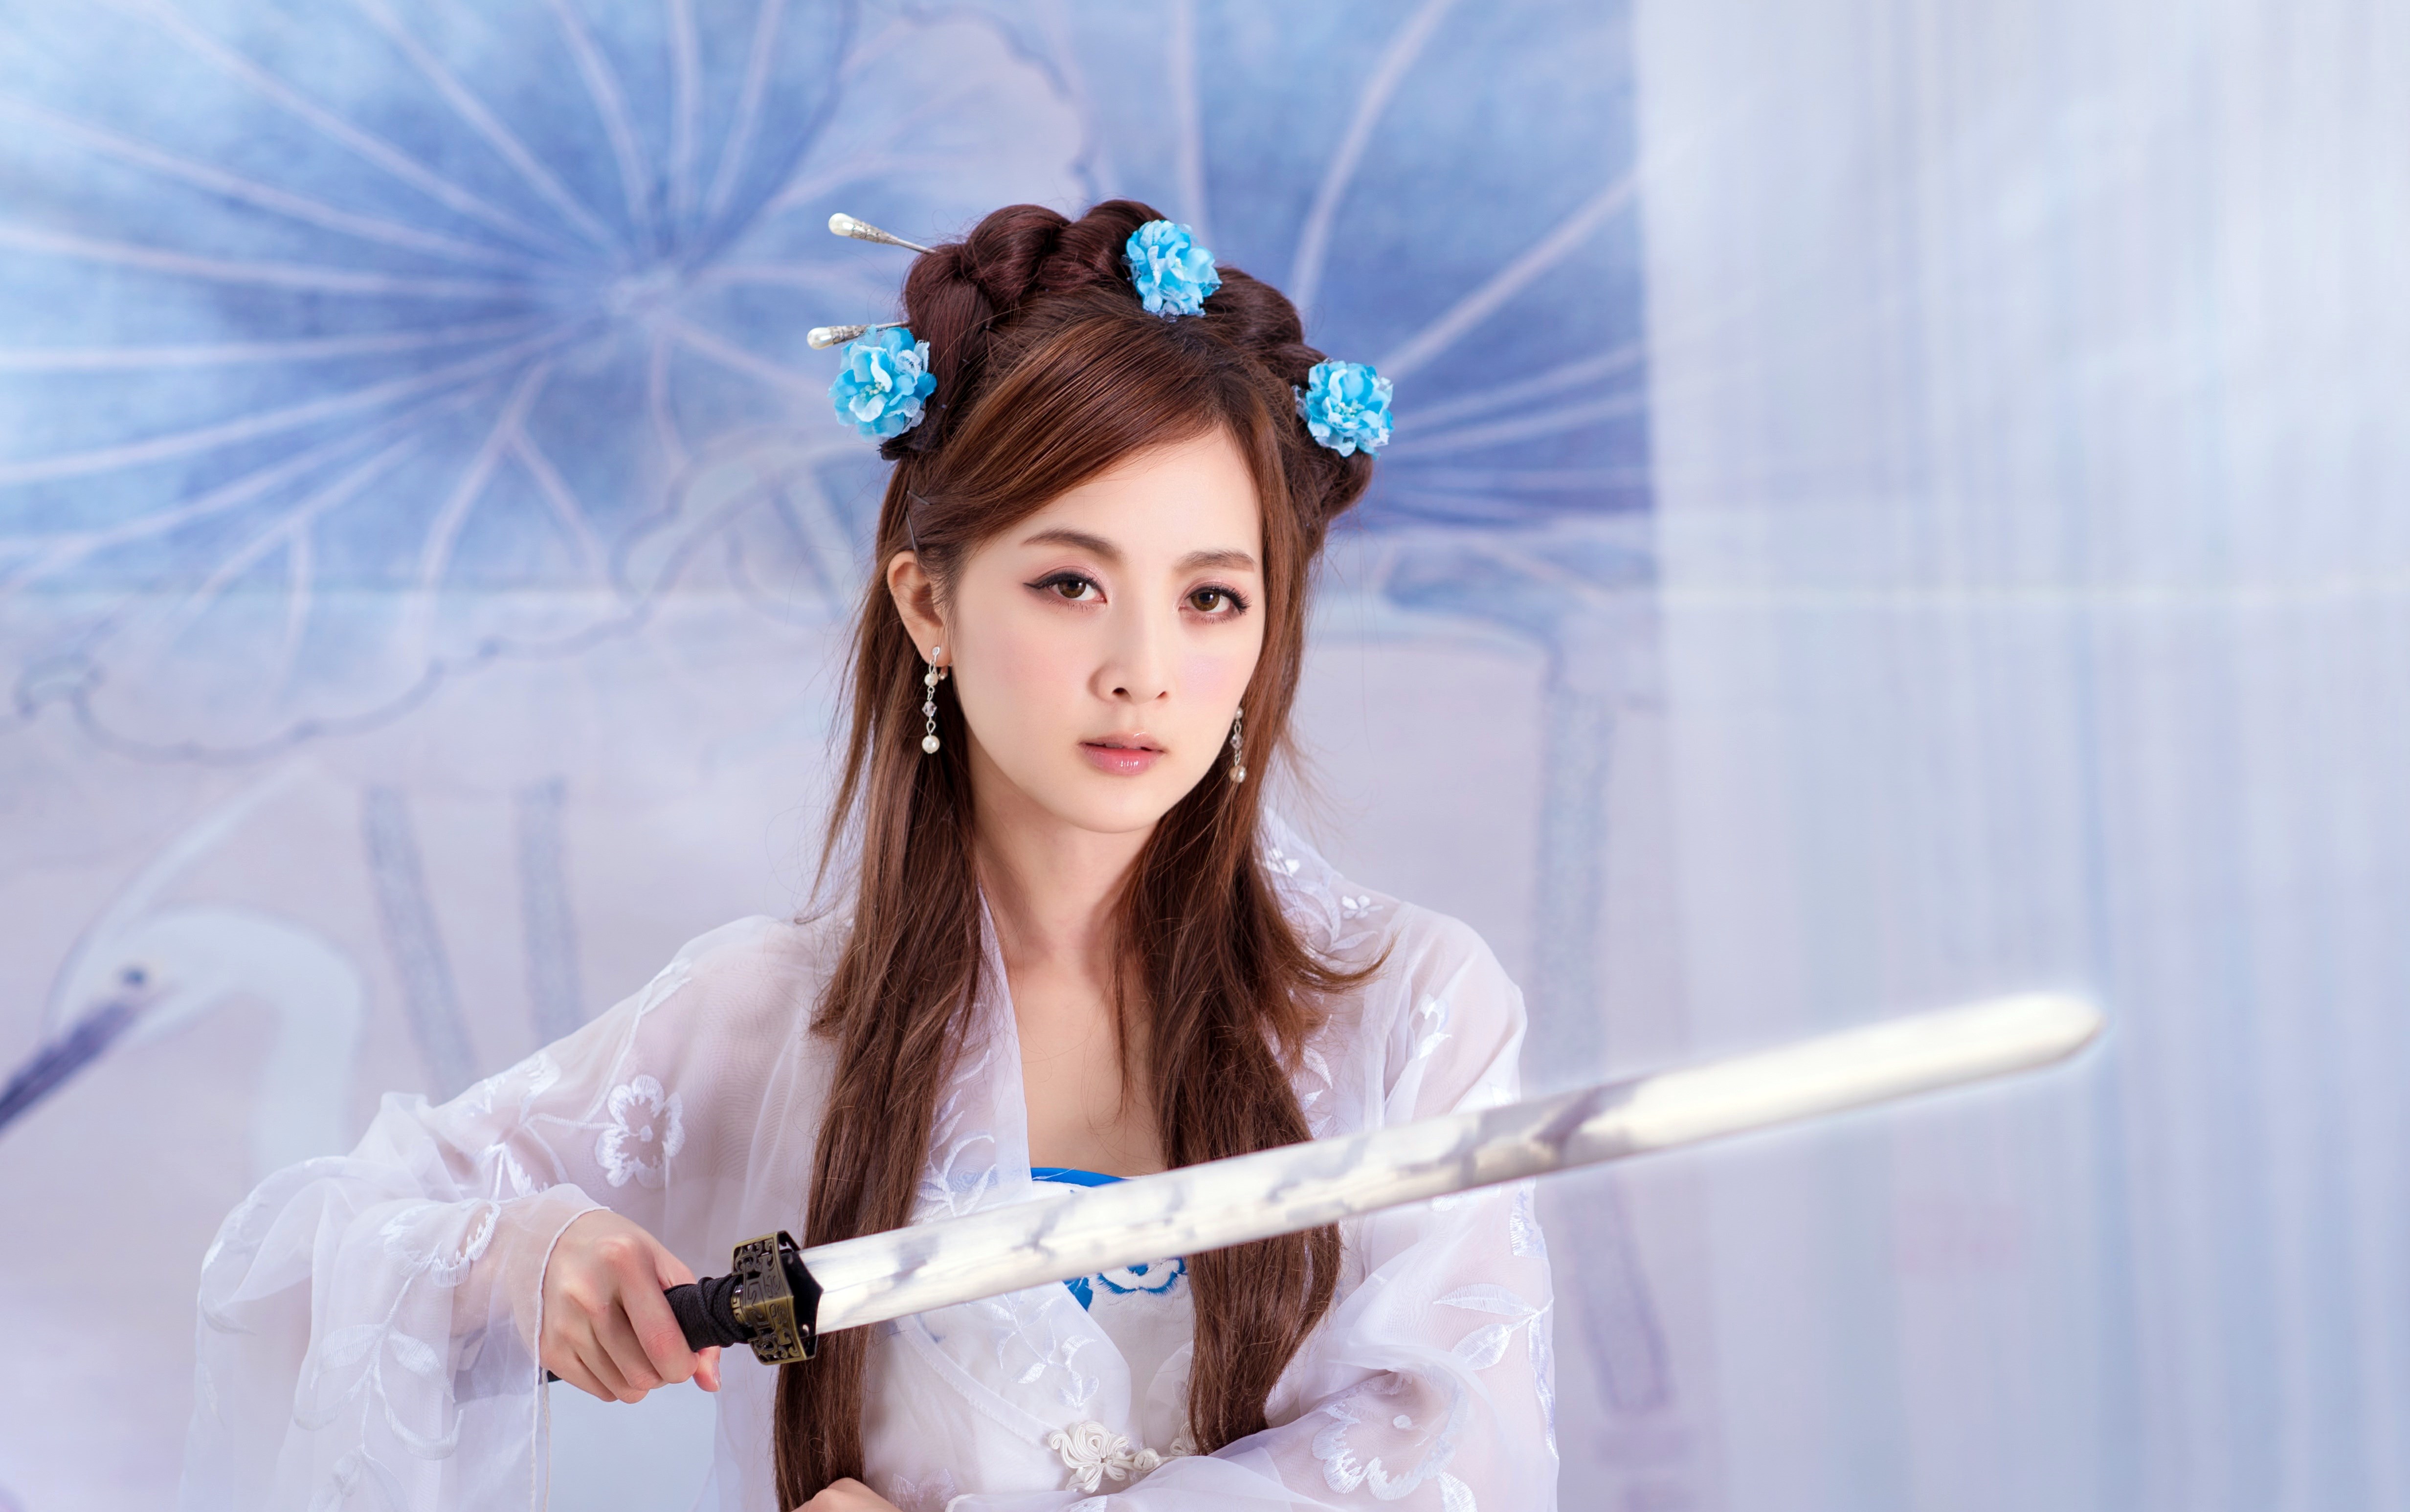 Фото меч Шатенка Mikako Zhang Kaijie, Japanese молодая женщина Азиаты смотрят 4928x3092 Мечи меча с мечом шатенки девушка Девушки молодые женщины азиатки азиатка Взгляд смотрит